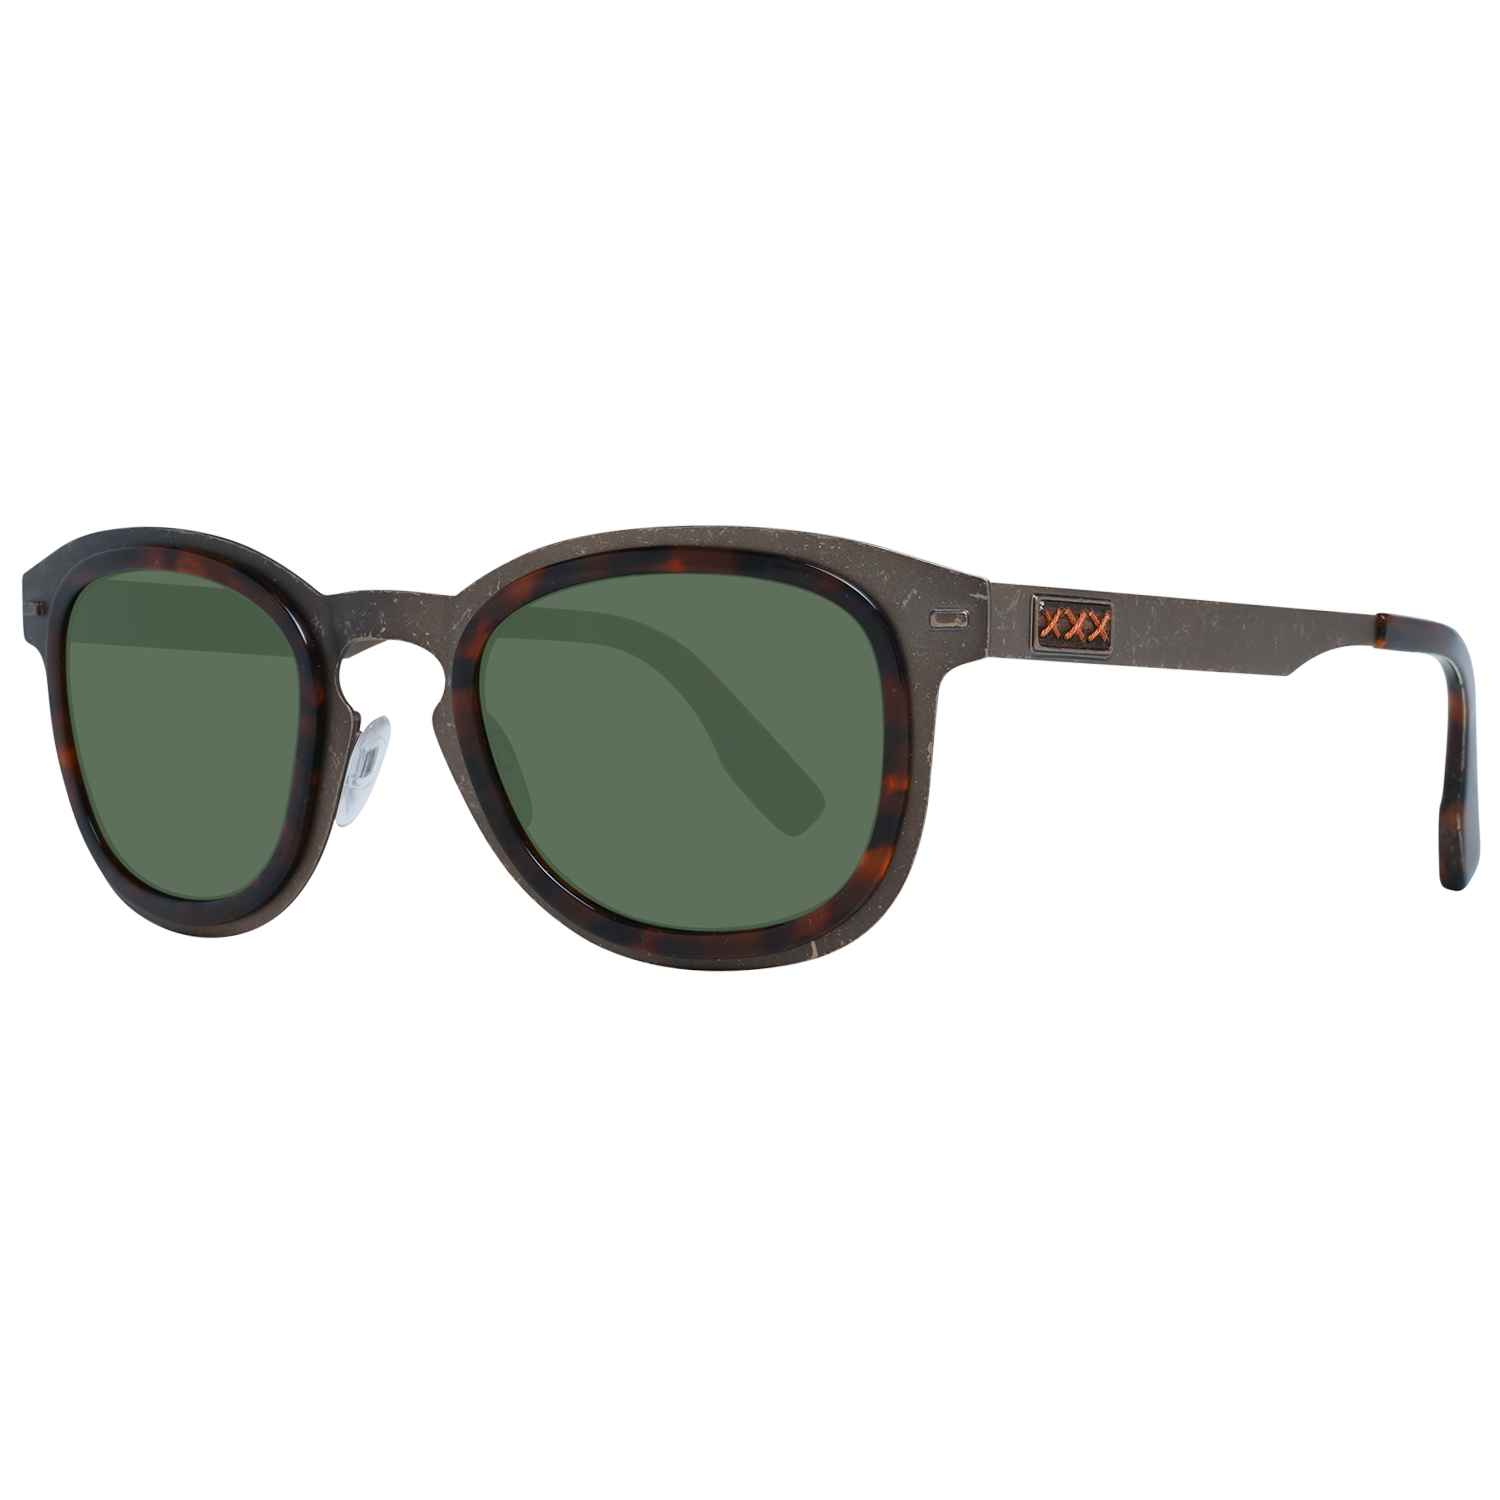 Zegna Couture Sunglasses Zegna Couture Sunglasses ZC0007 50 20R Titanium Eyeglasses Eyewear UK USA Australia 